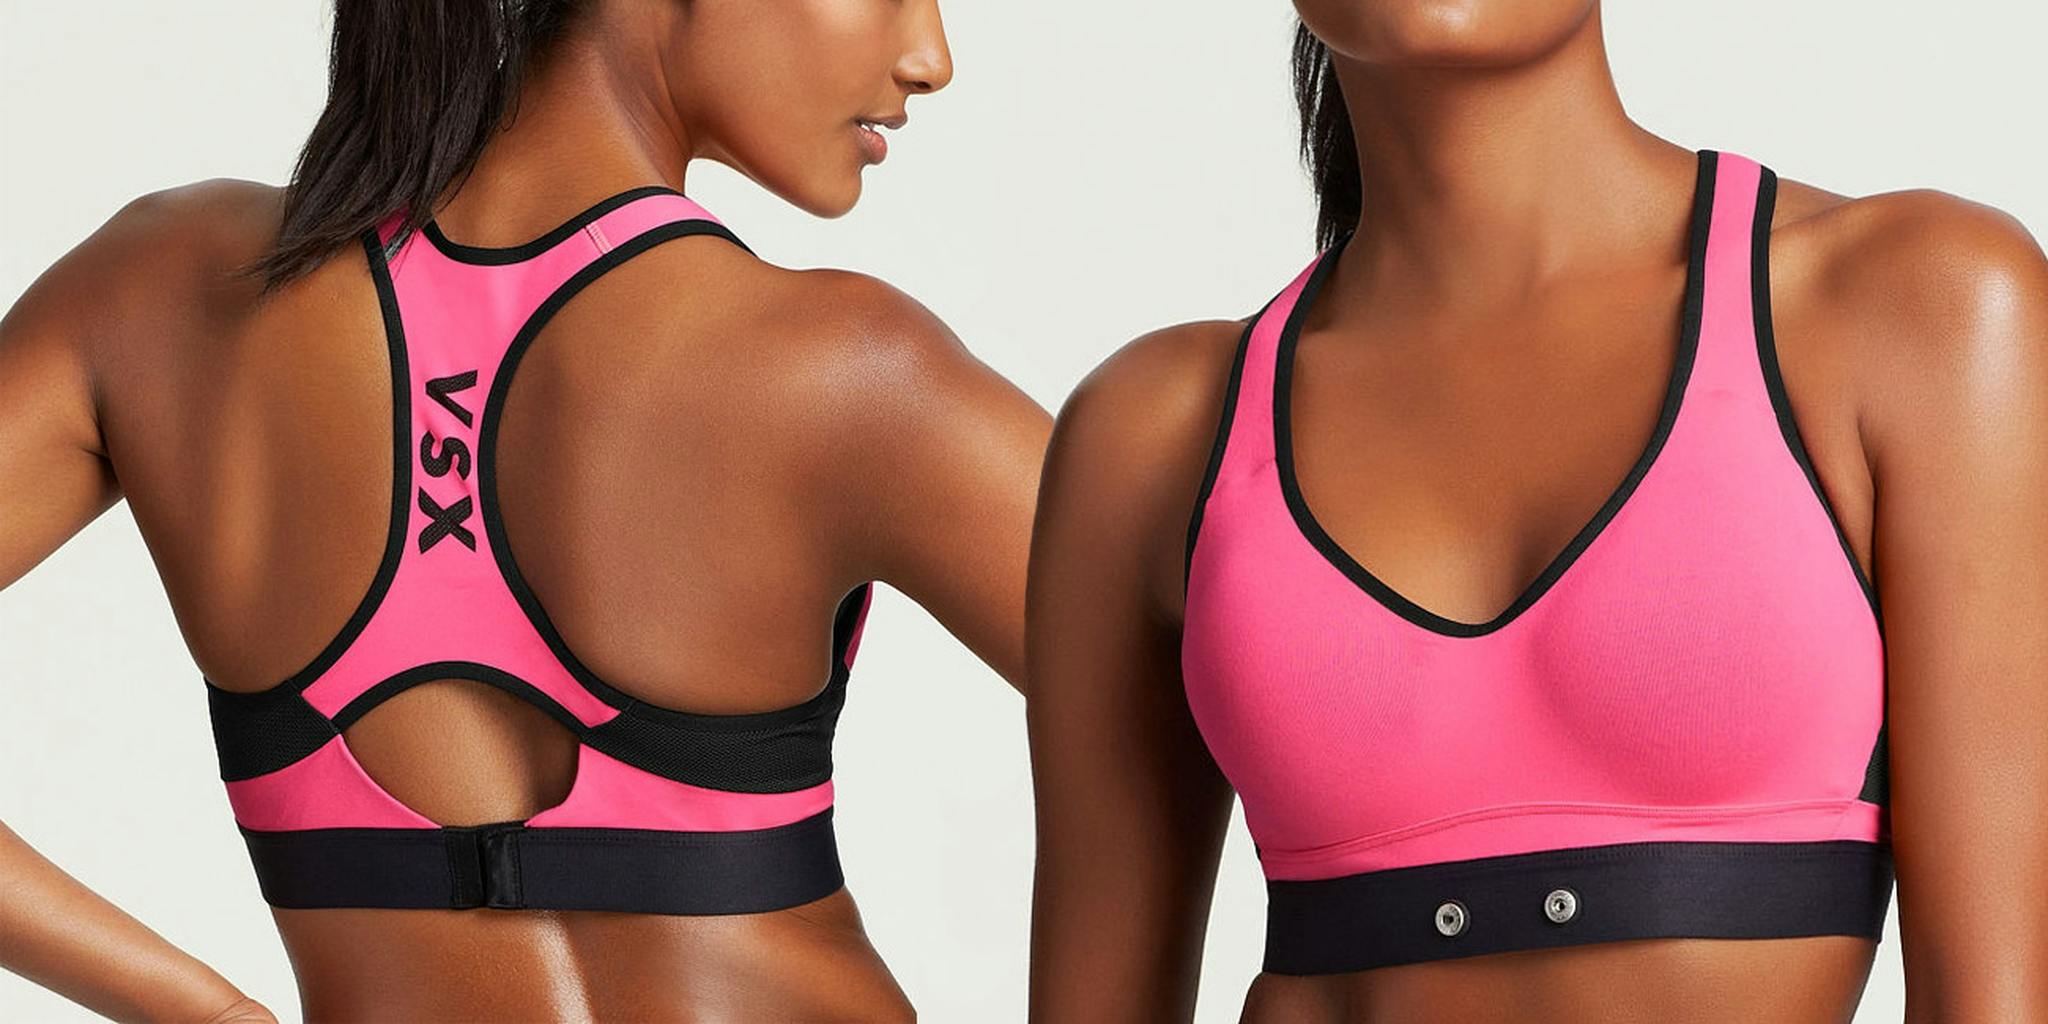 Victoria's Secret enters the wearables market with a high-tech bra